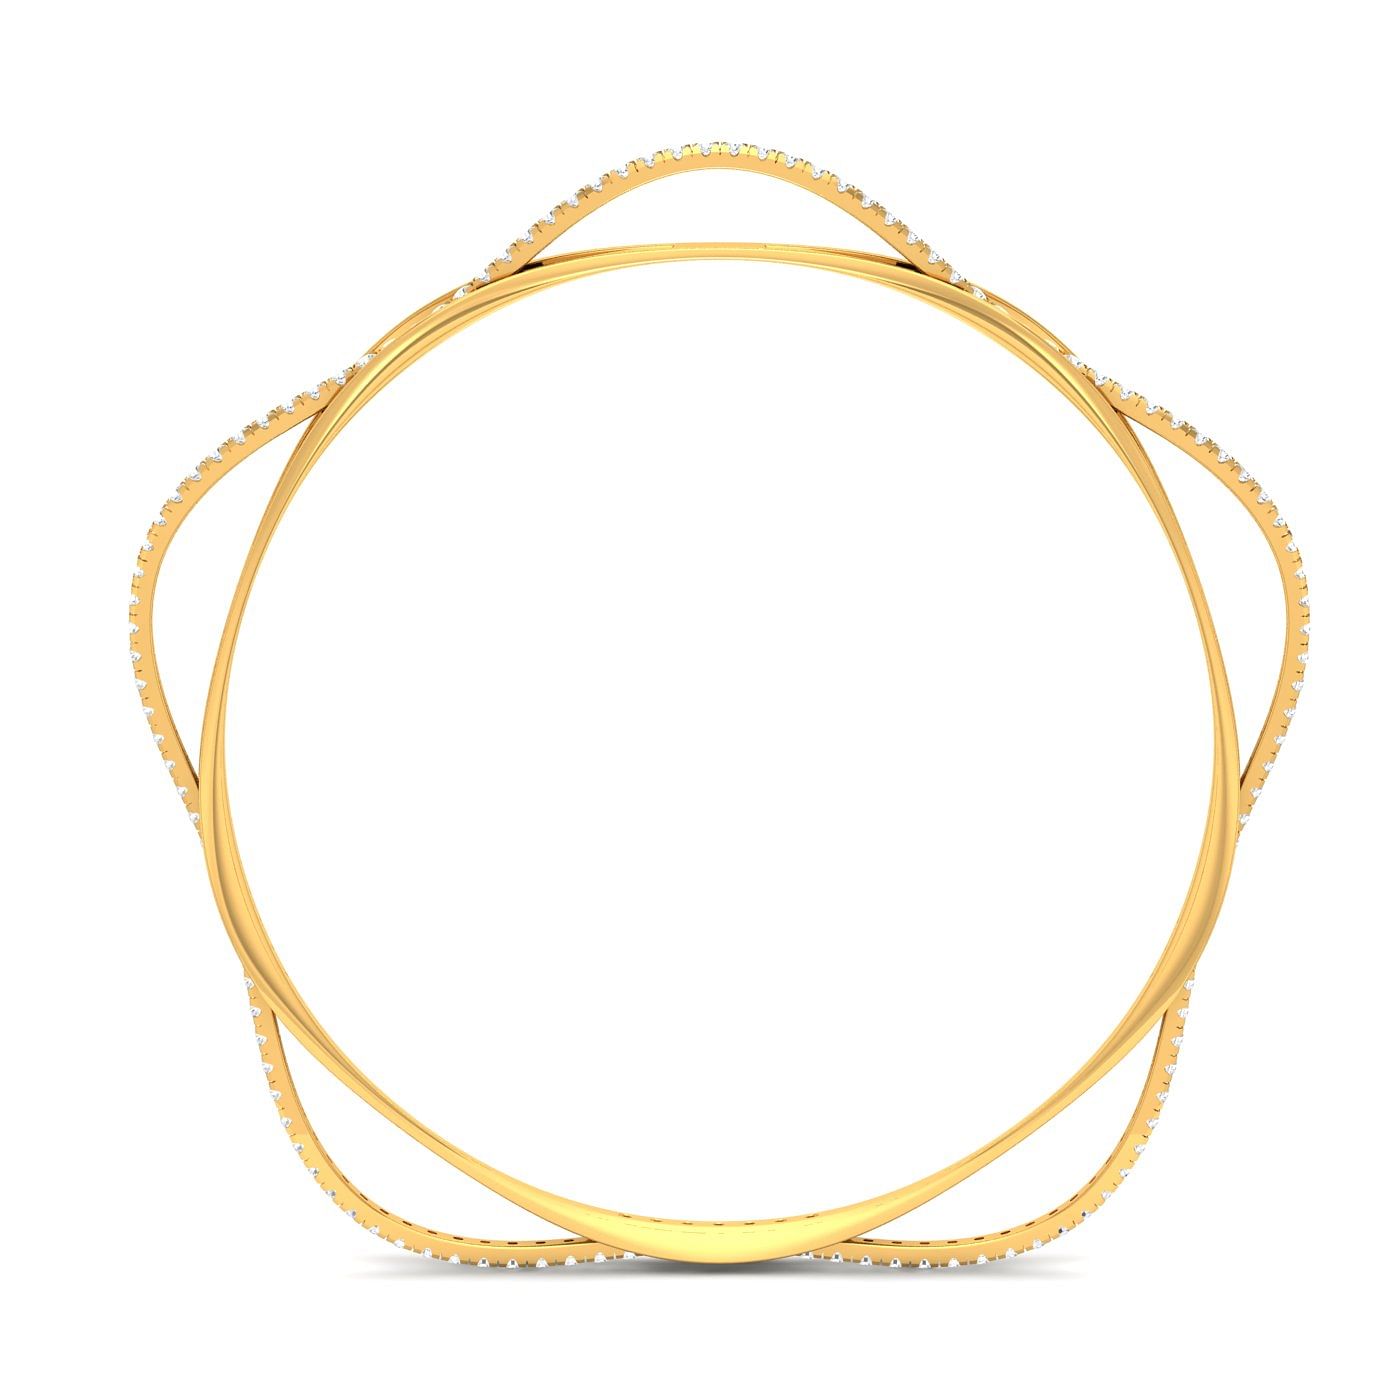 18k Designer Yellow Gold Aditi Flora Diamond Bangles